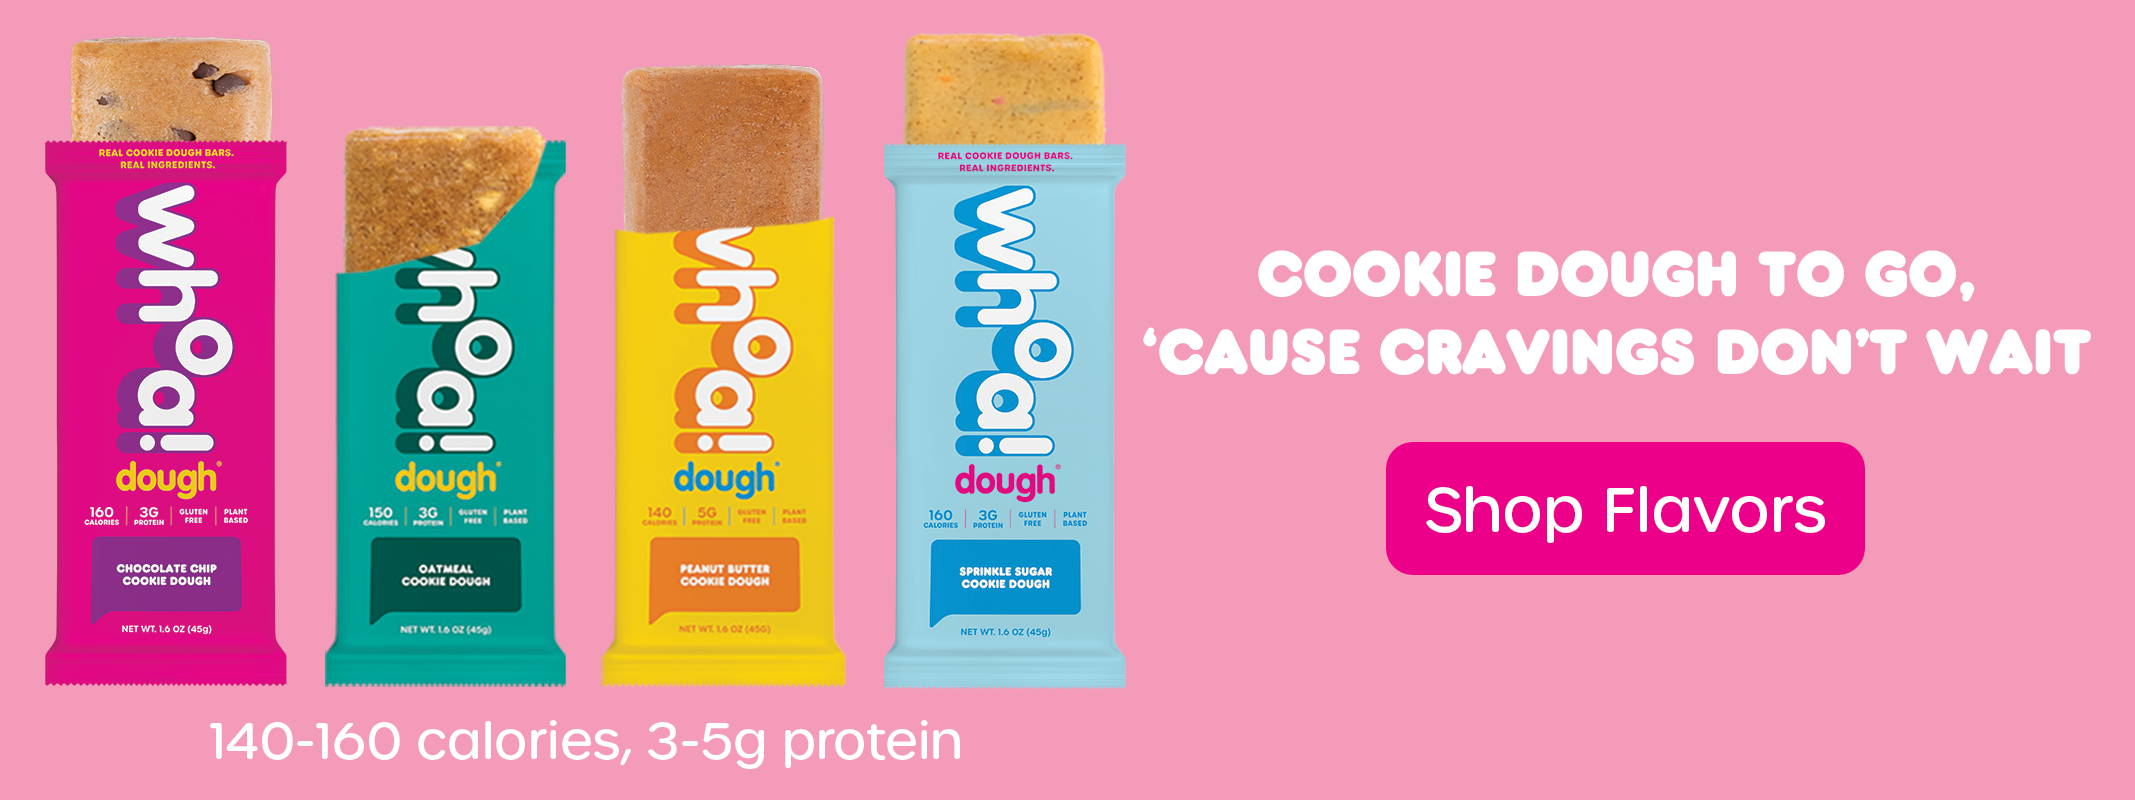 Sugar Cookie Dough by Whoa Dough – Touchy Feely